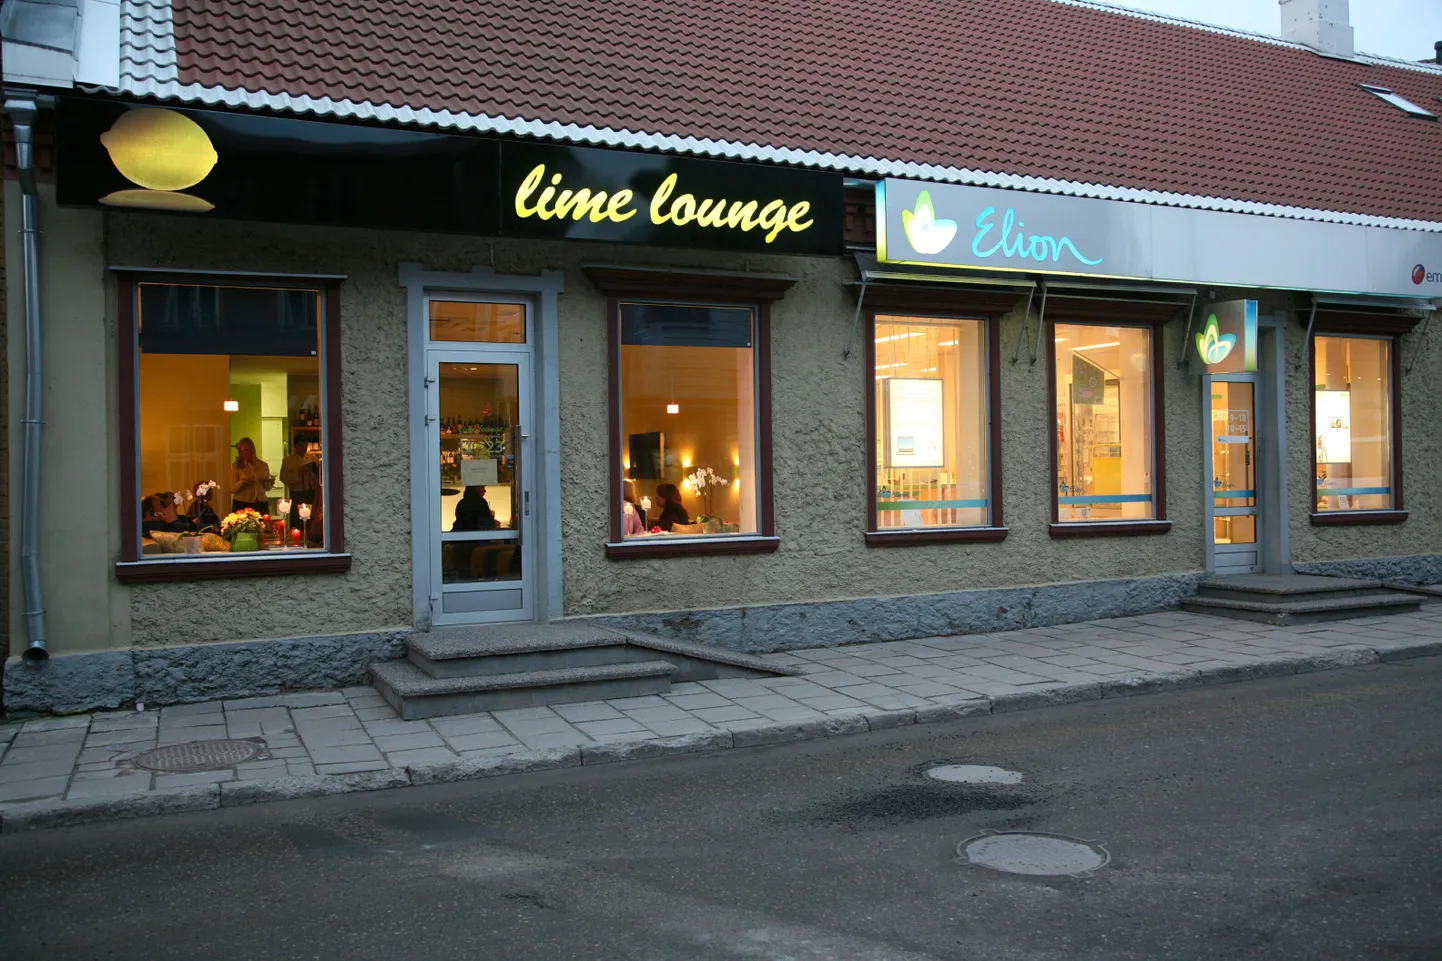 Lime Lounge.